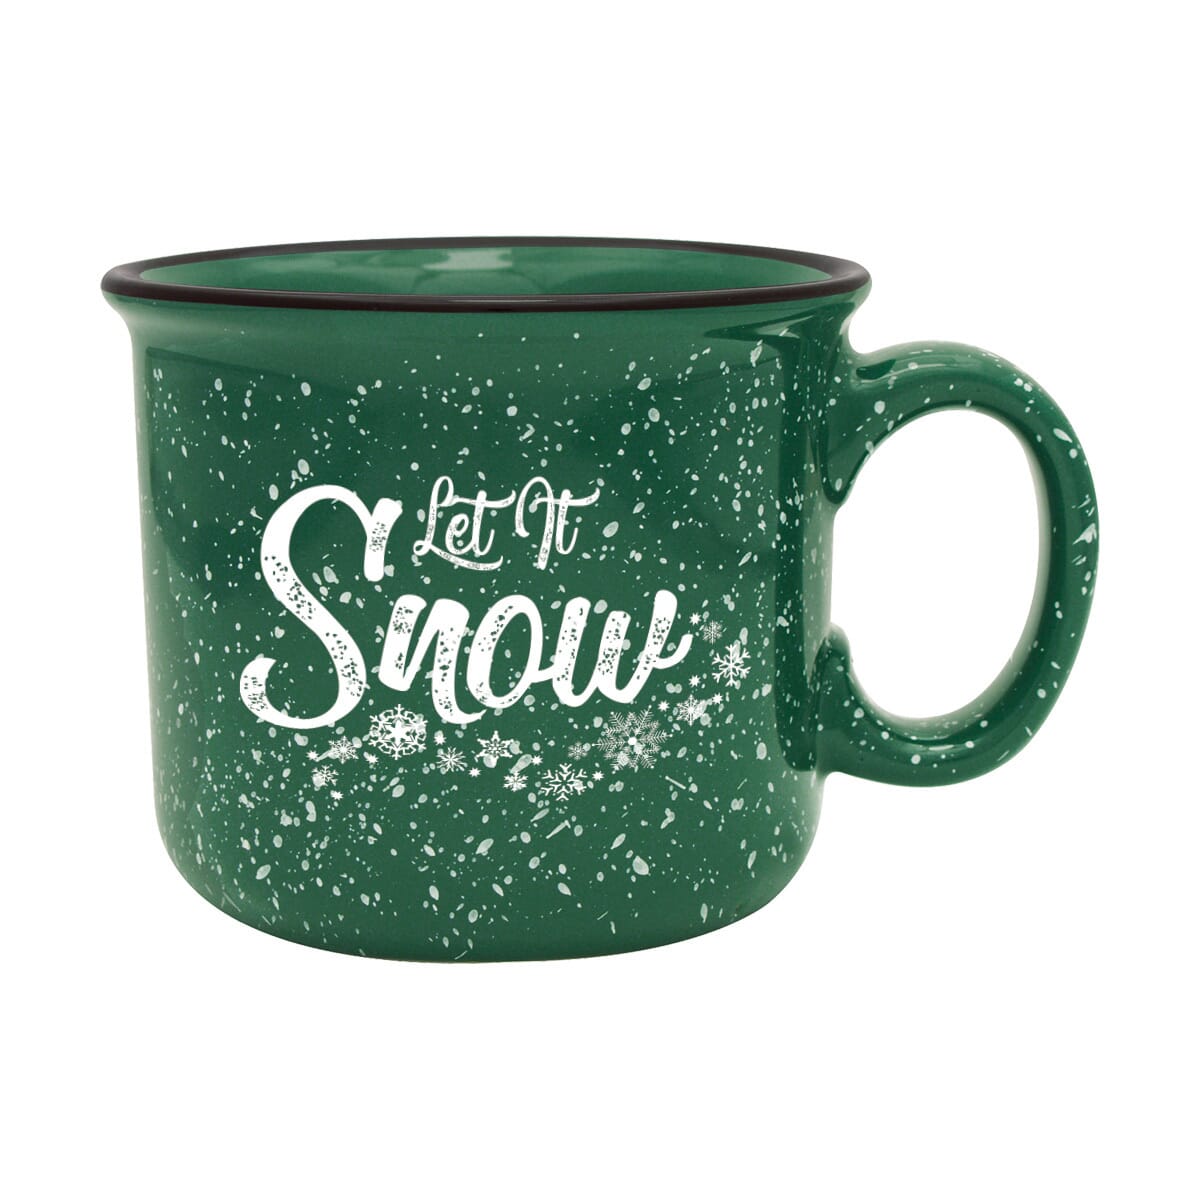 Ceramic mug with holiday saying